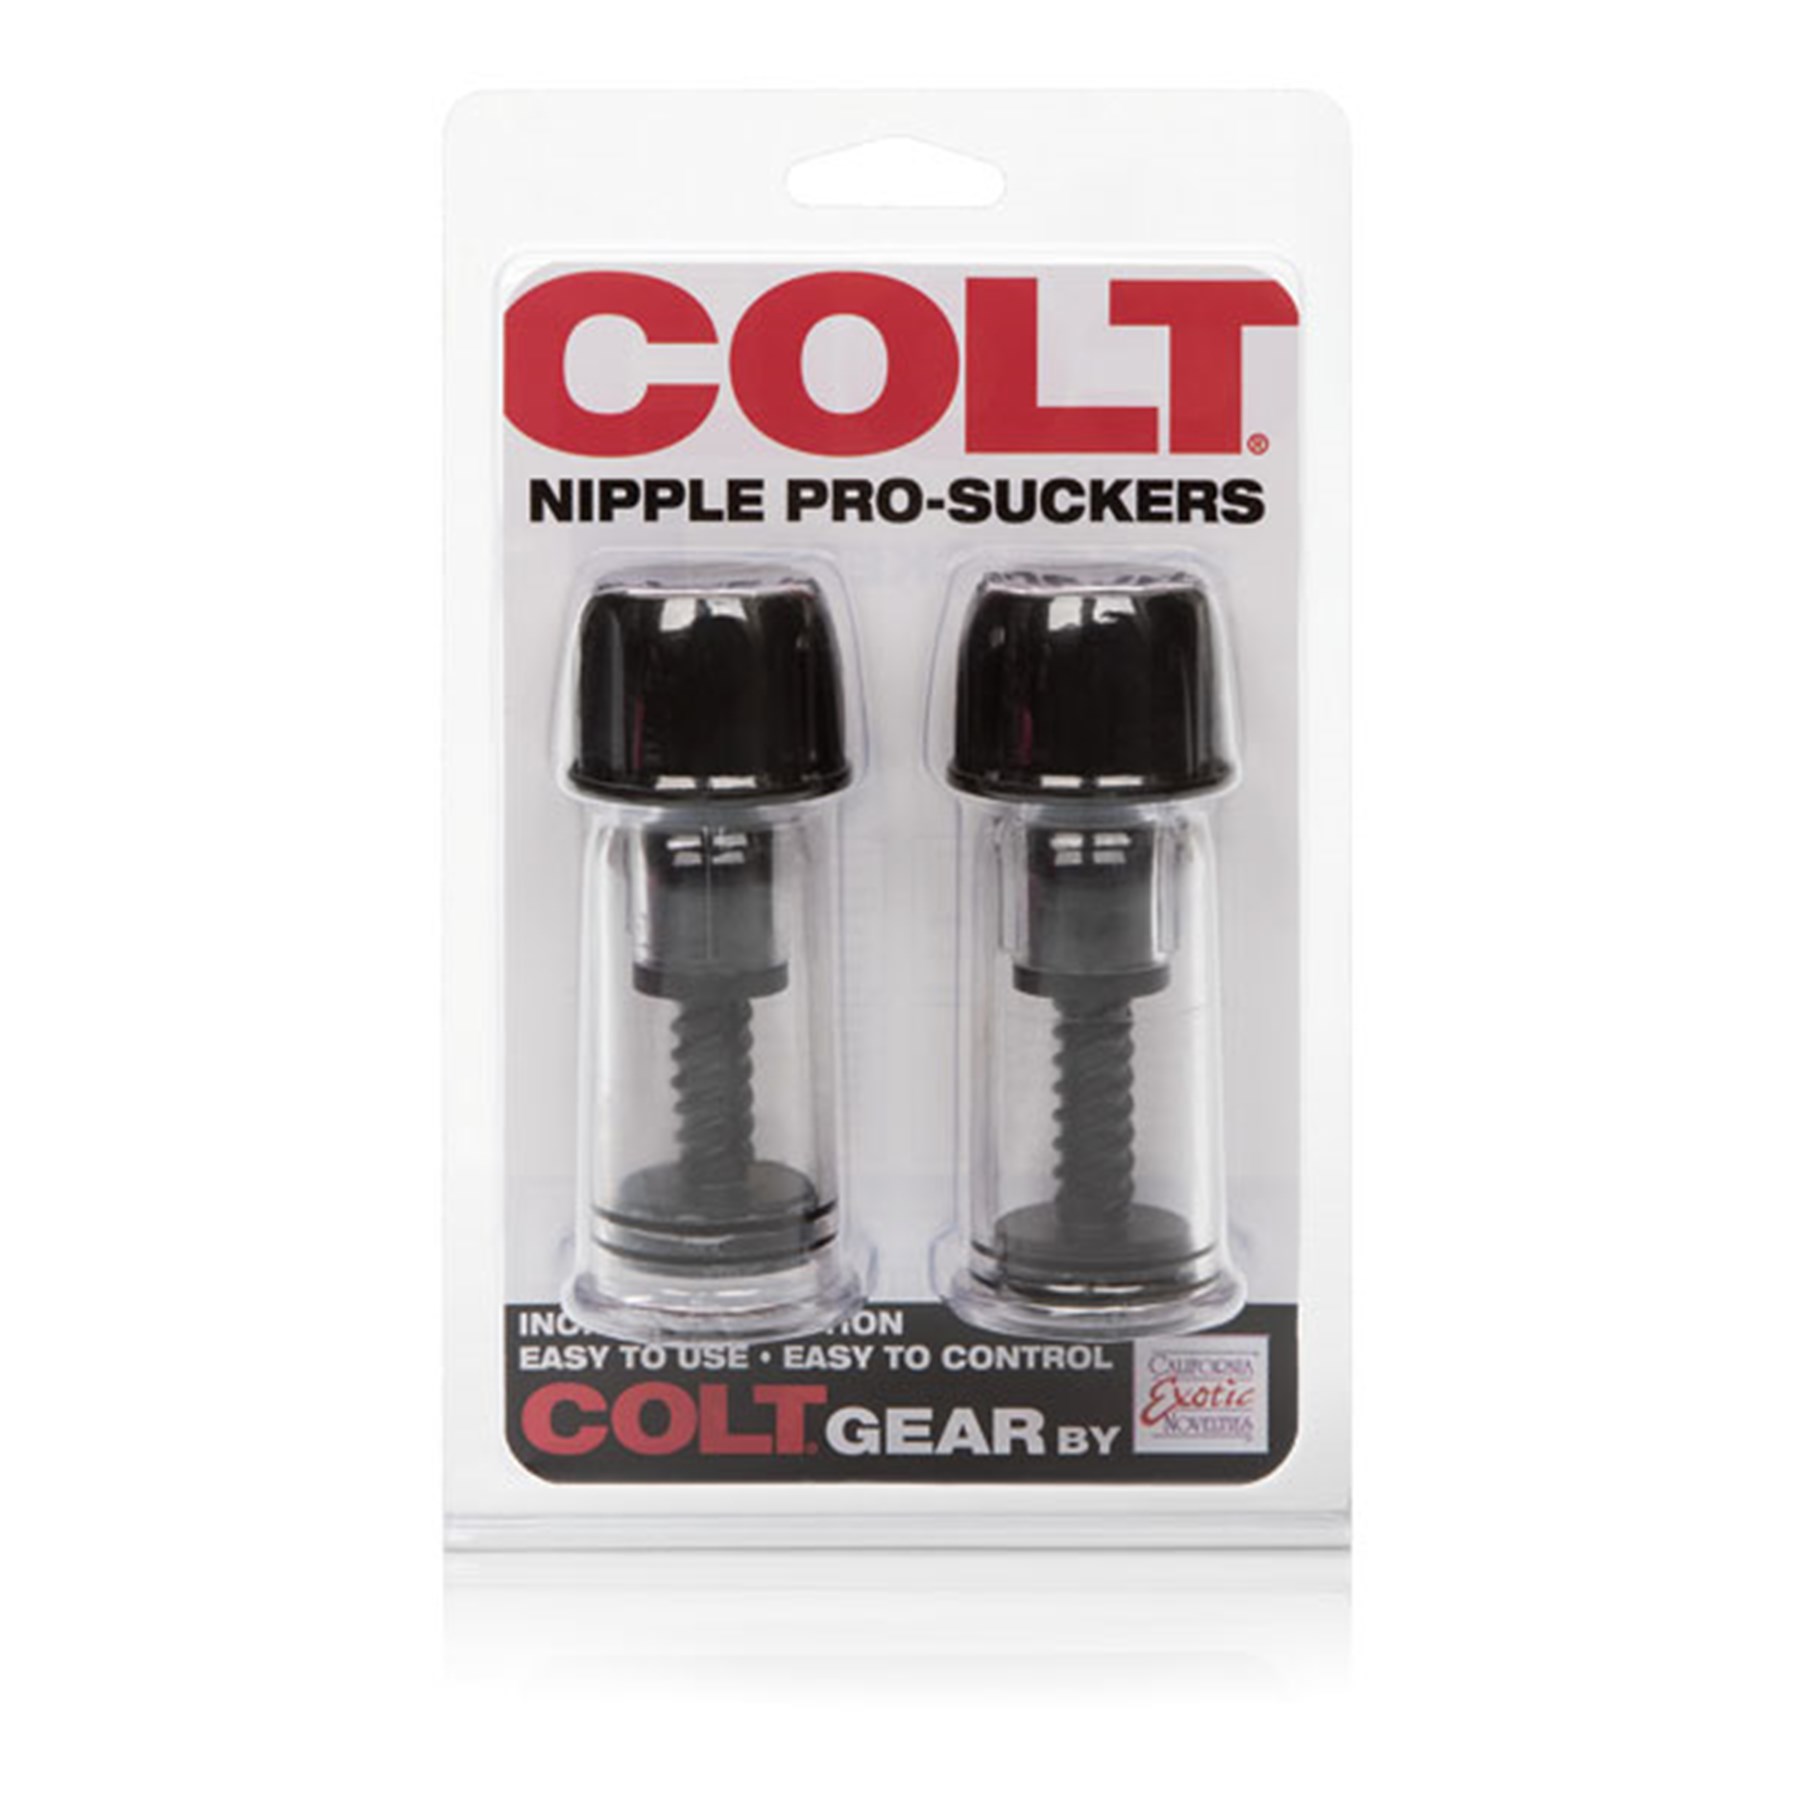 Colt Nipple Pro Suckers packaging